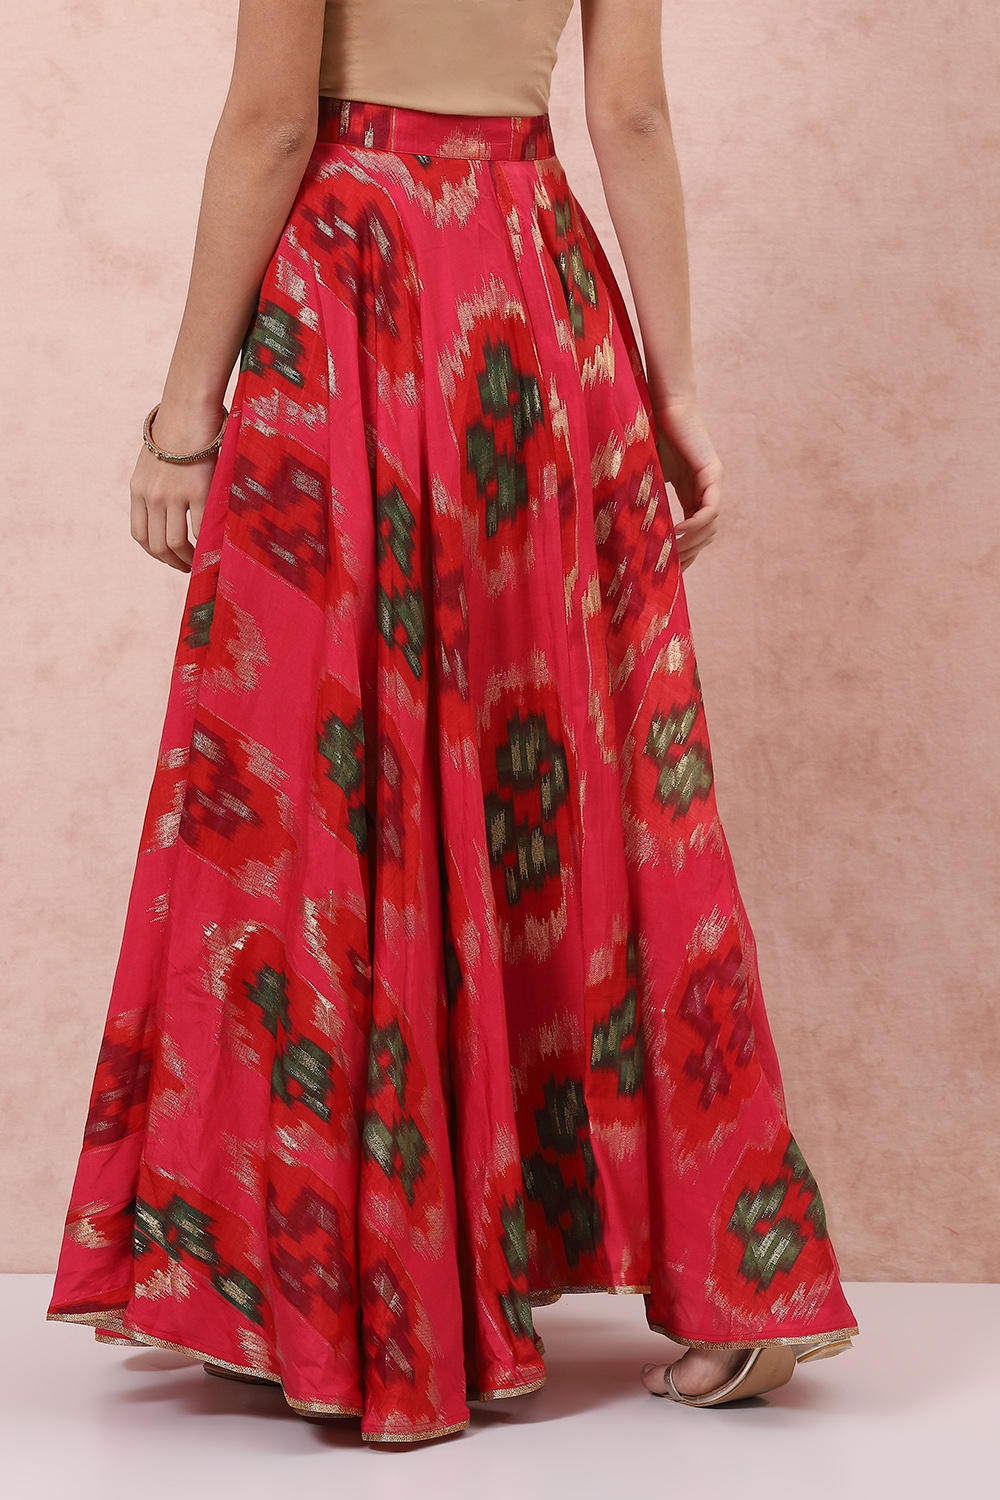 Buy Pink Viscose Long Skirt from Skirts for INR1499.50 |Rangriti